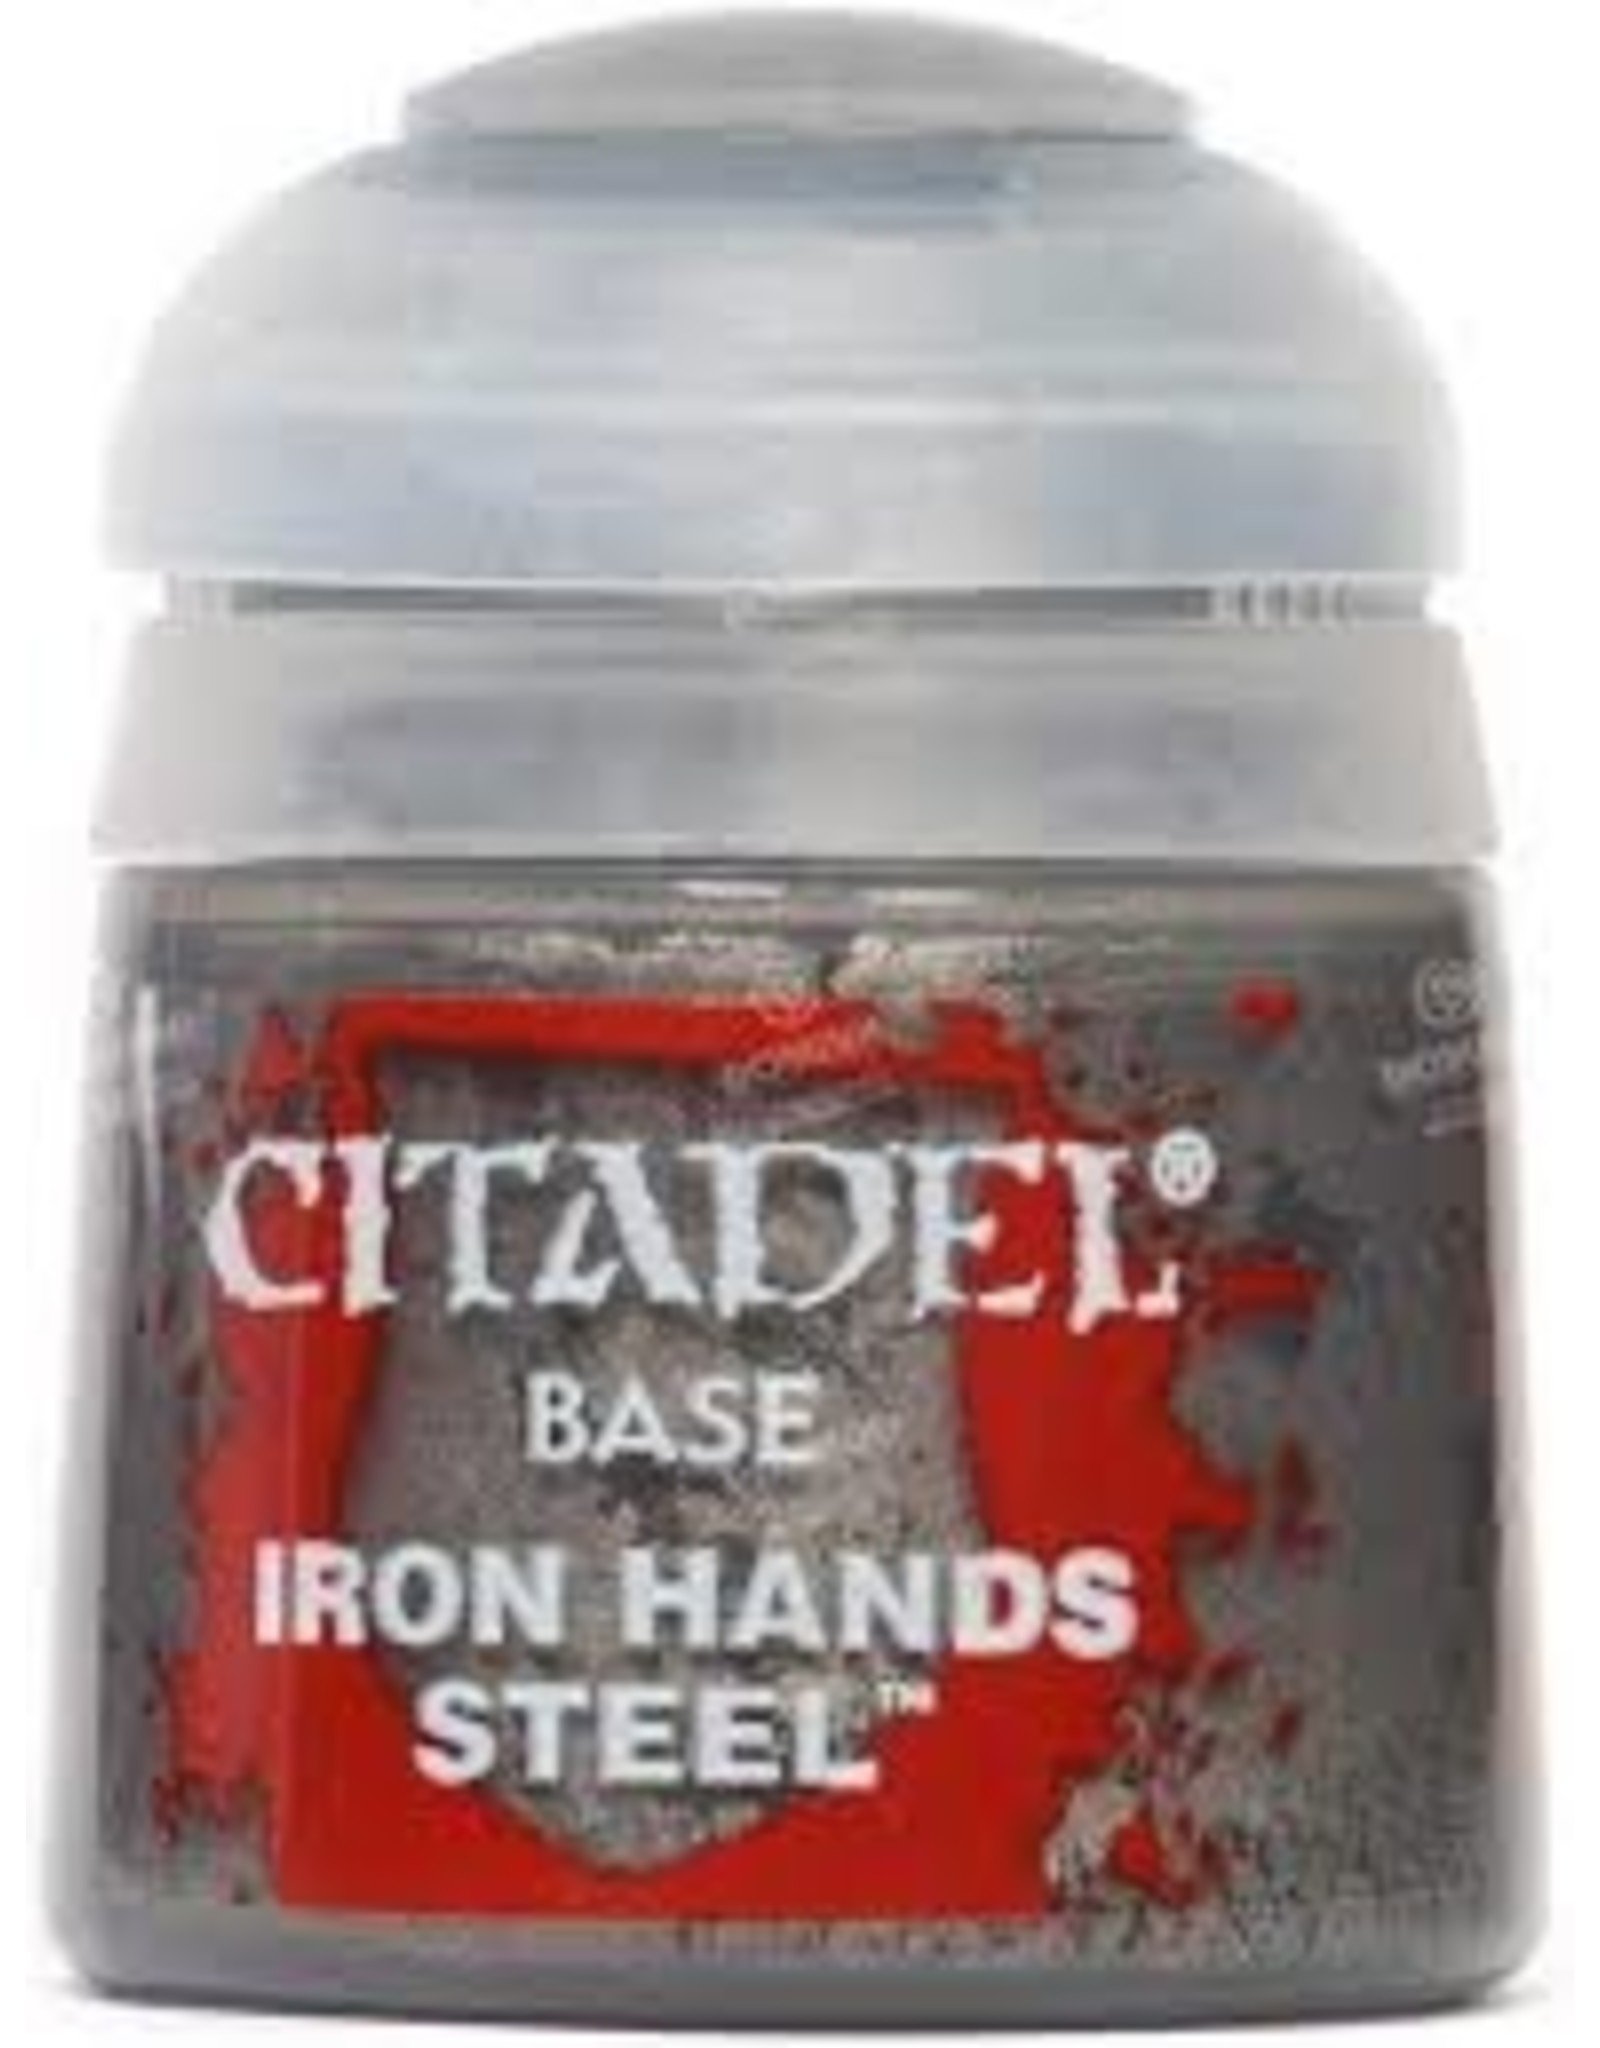 Citadel Paints: Base - Iron Hands Steel - Black Diamond Games